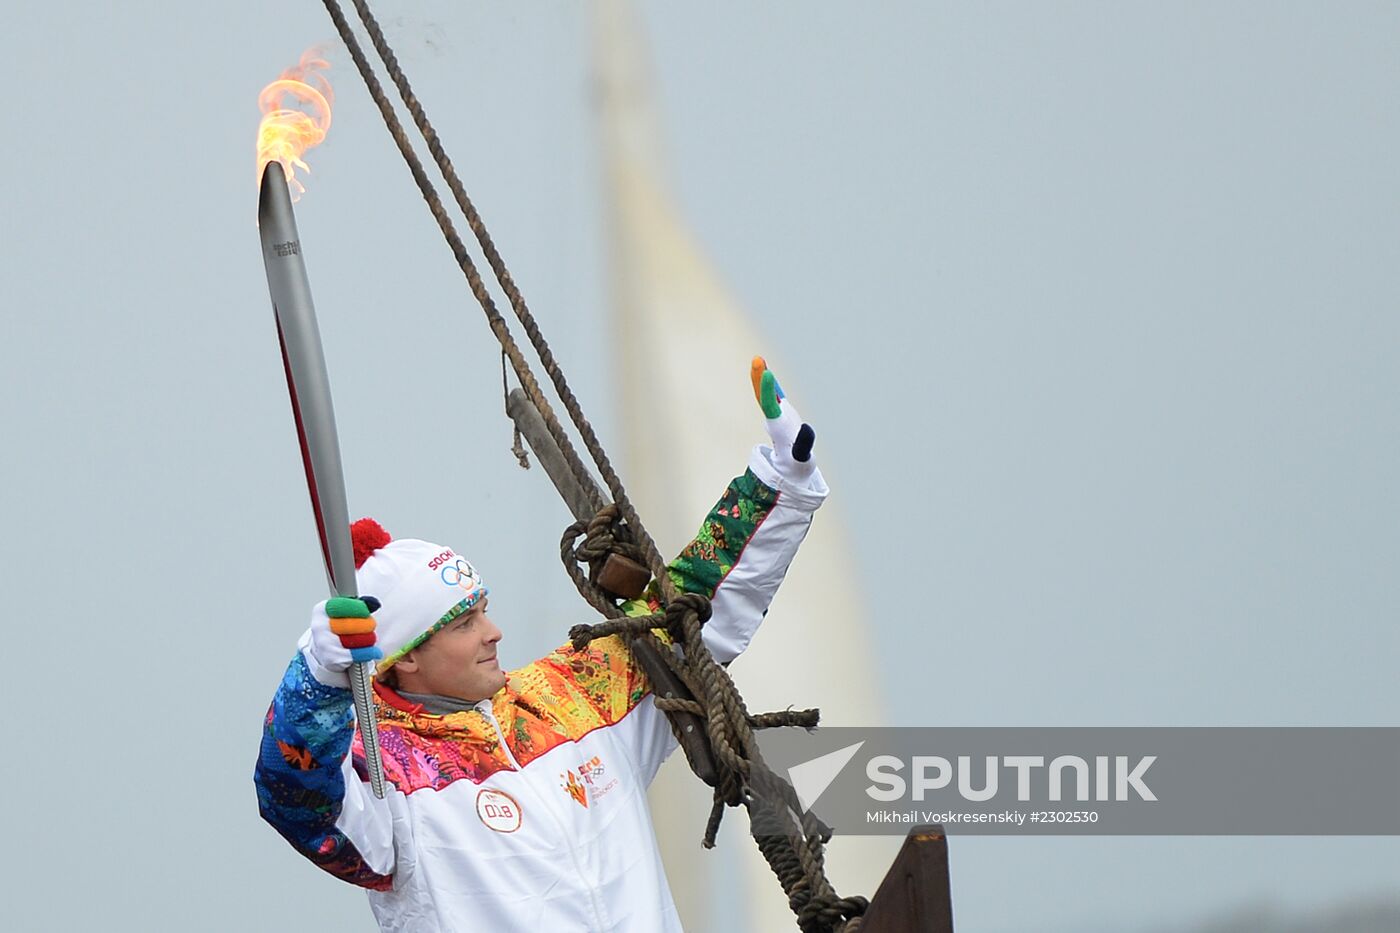 Sochi 2014 Olympic torch relay. Vladimir Region